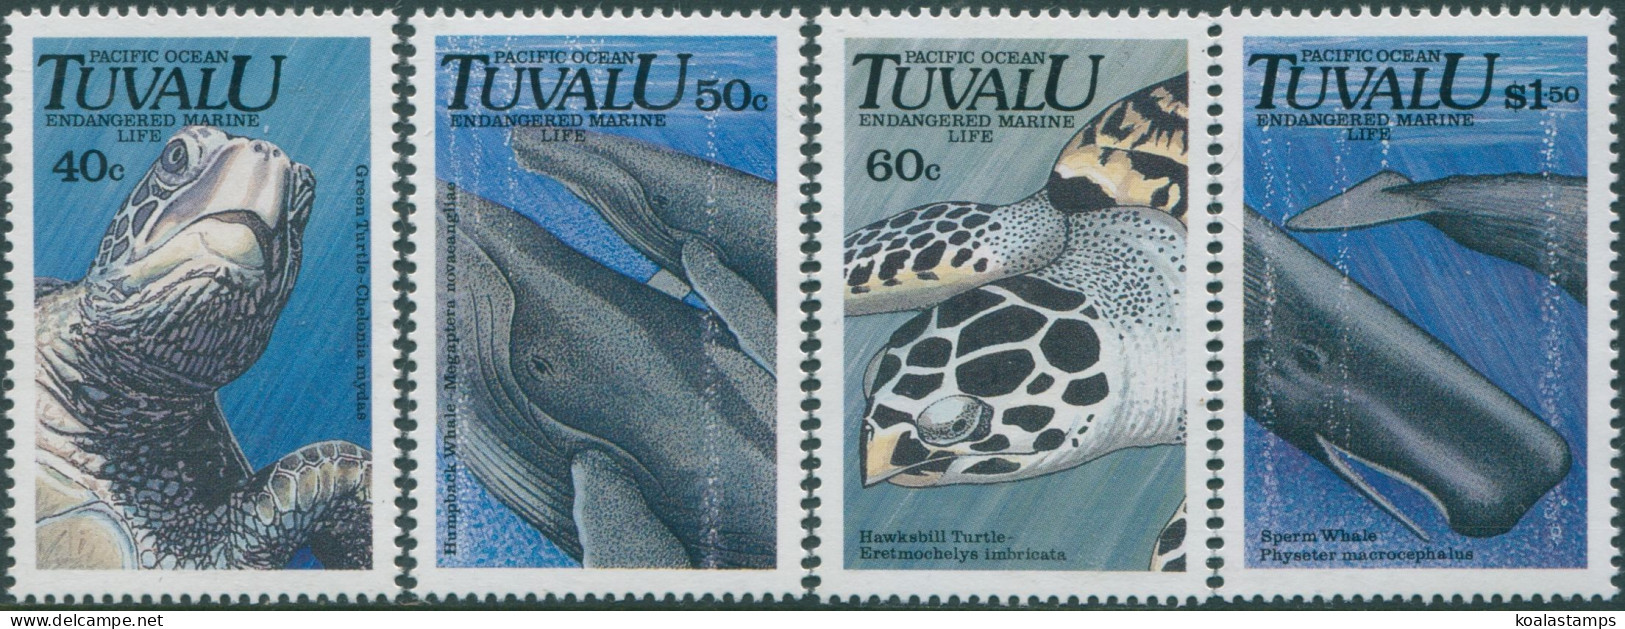 Tuvalu 1991 SG605-608 Endangered Marine Life Set MNH - Tuvalu (fr. Elliceinseln)